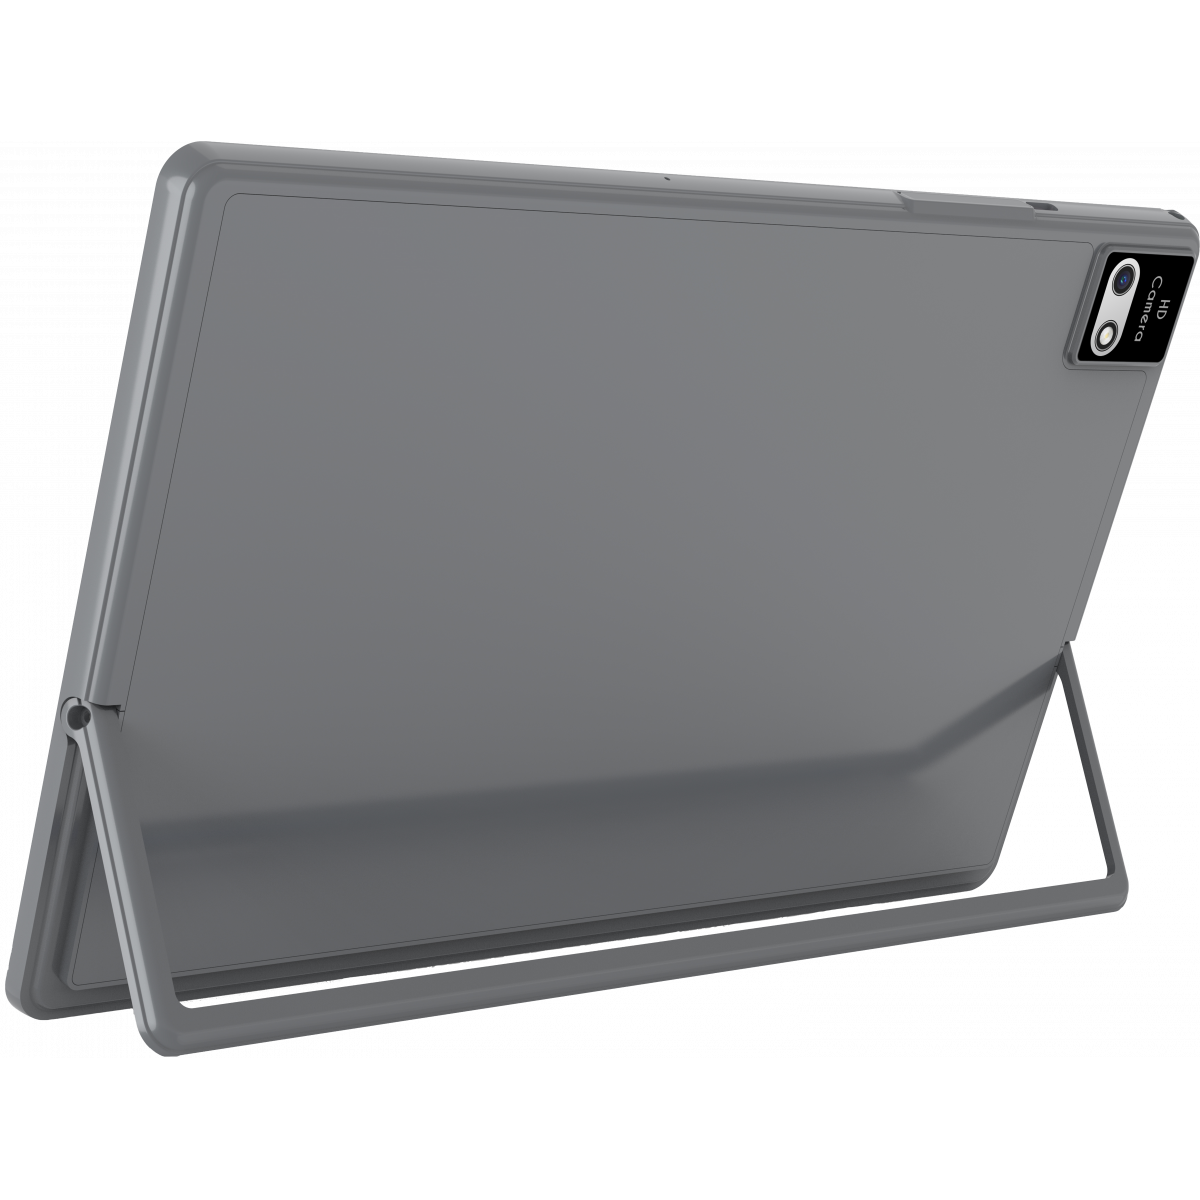 Promo Logicom tablette 129 multimédia adulte 10,1'' - caméra av 0,3 mp/ar  2mp - lecteur vidéos - appels vidéo - wifi - bluetooth chez